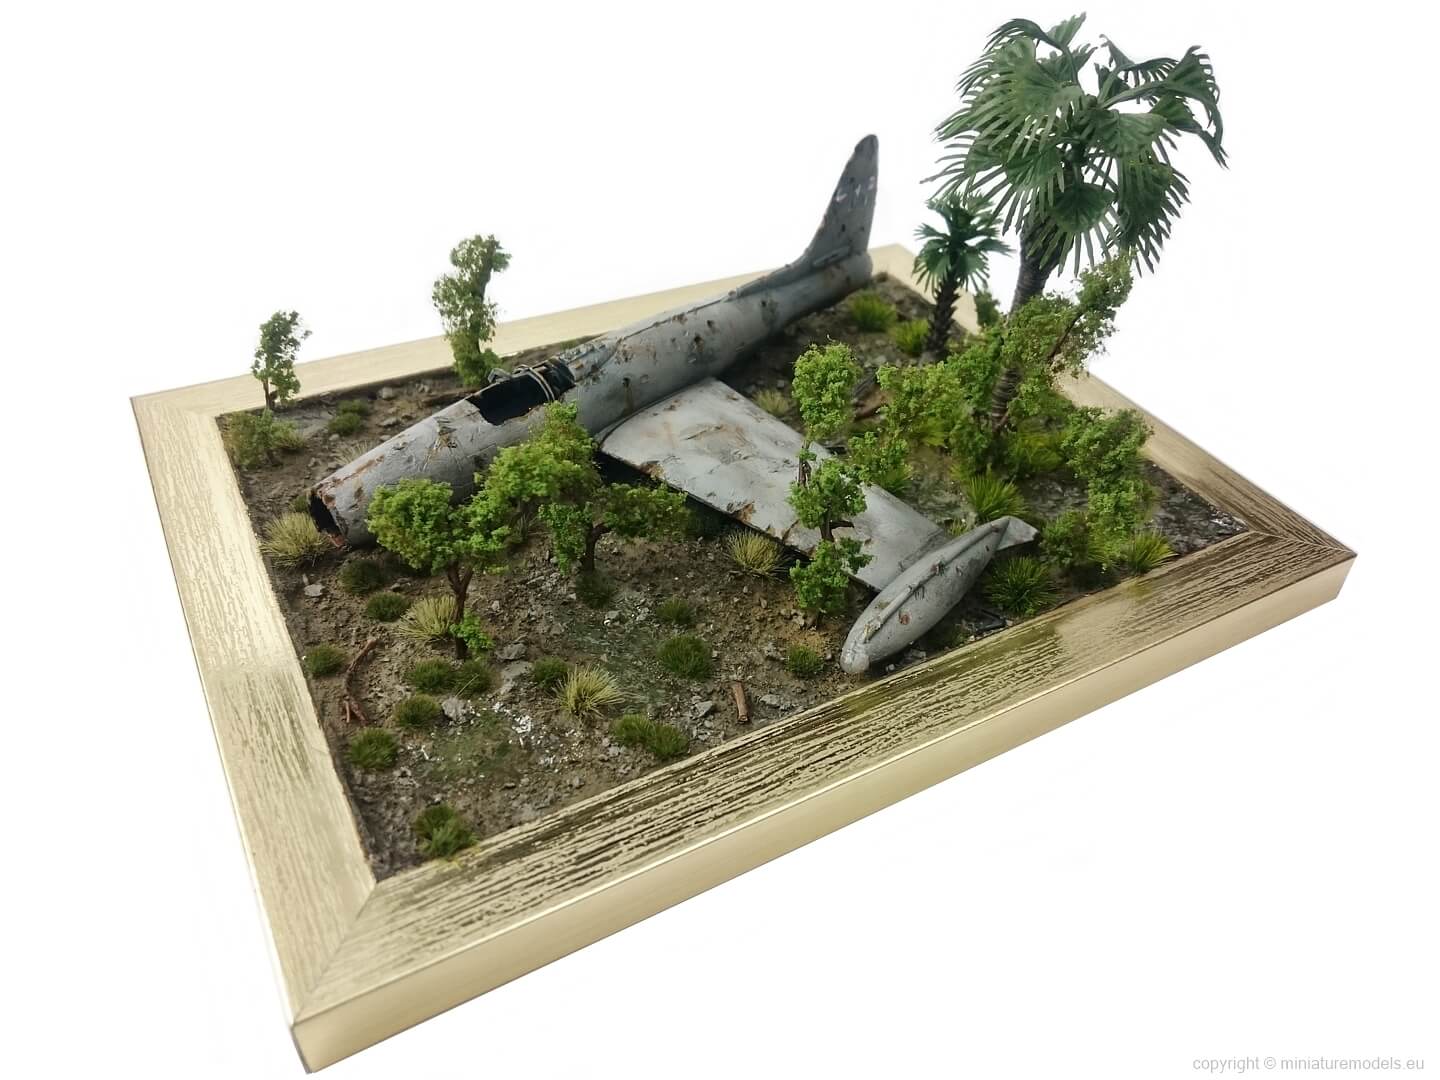 USA plane wreck in Vietnam diorama